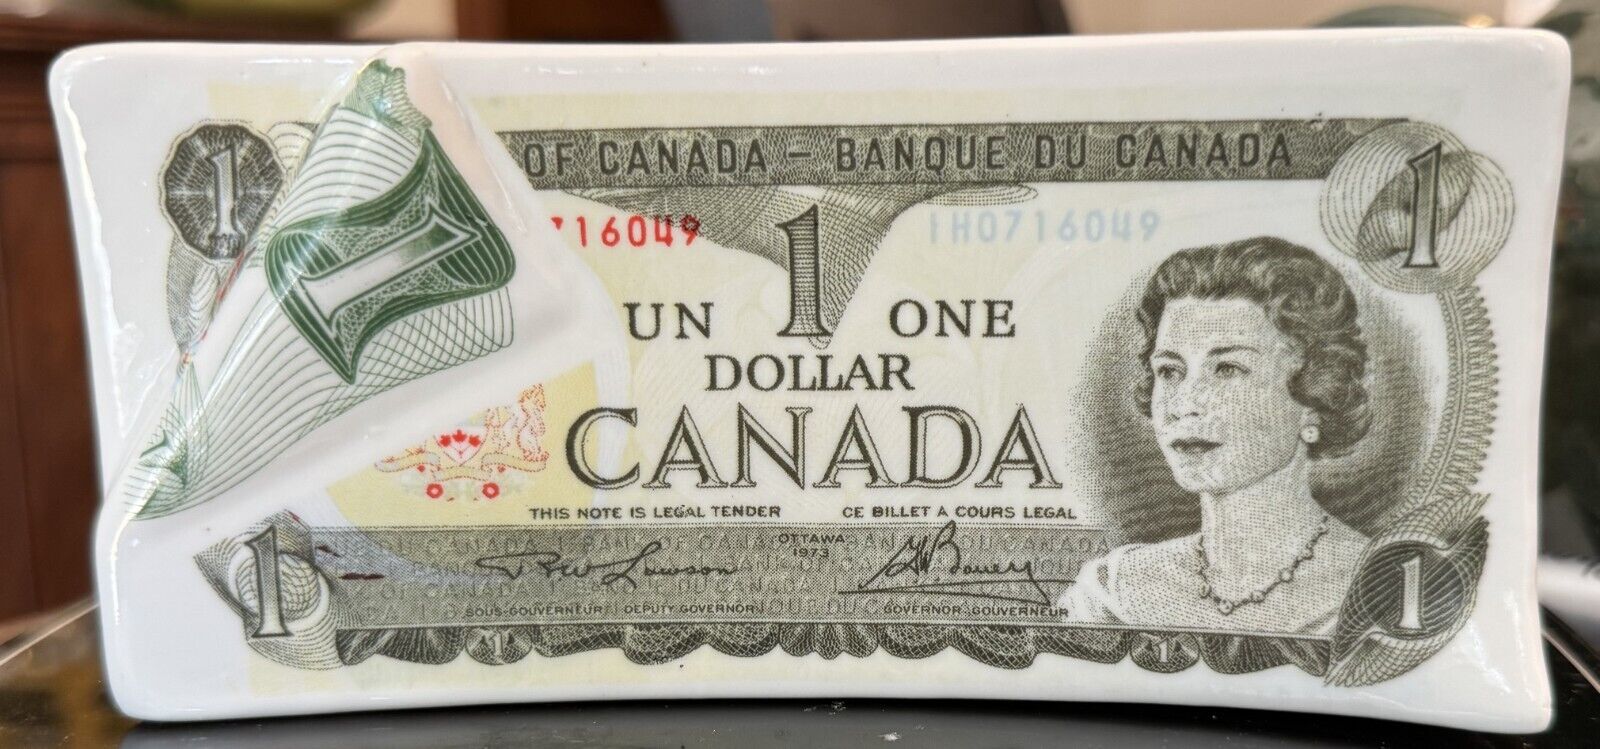 Vintage Canadian Canada Un One 1 Dollar Bill Stack Piggy Bank Banque Du Canada